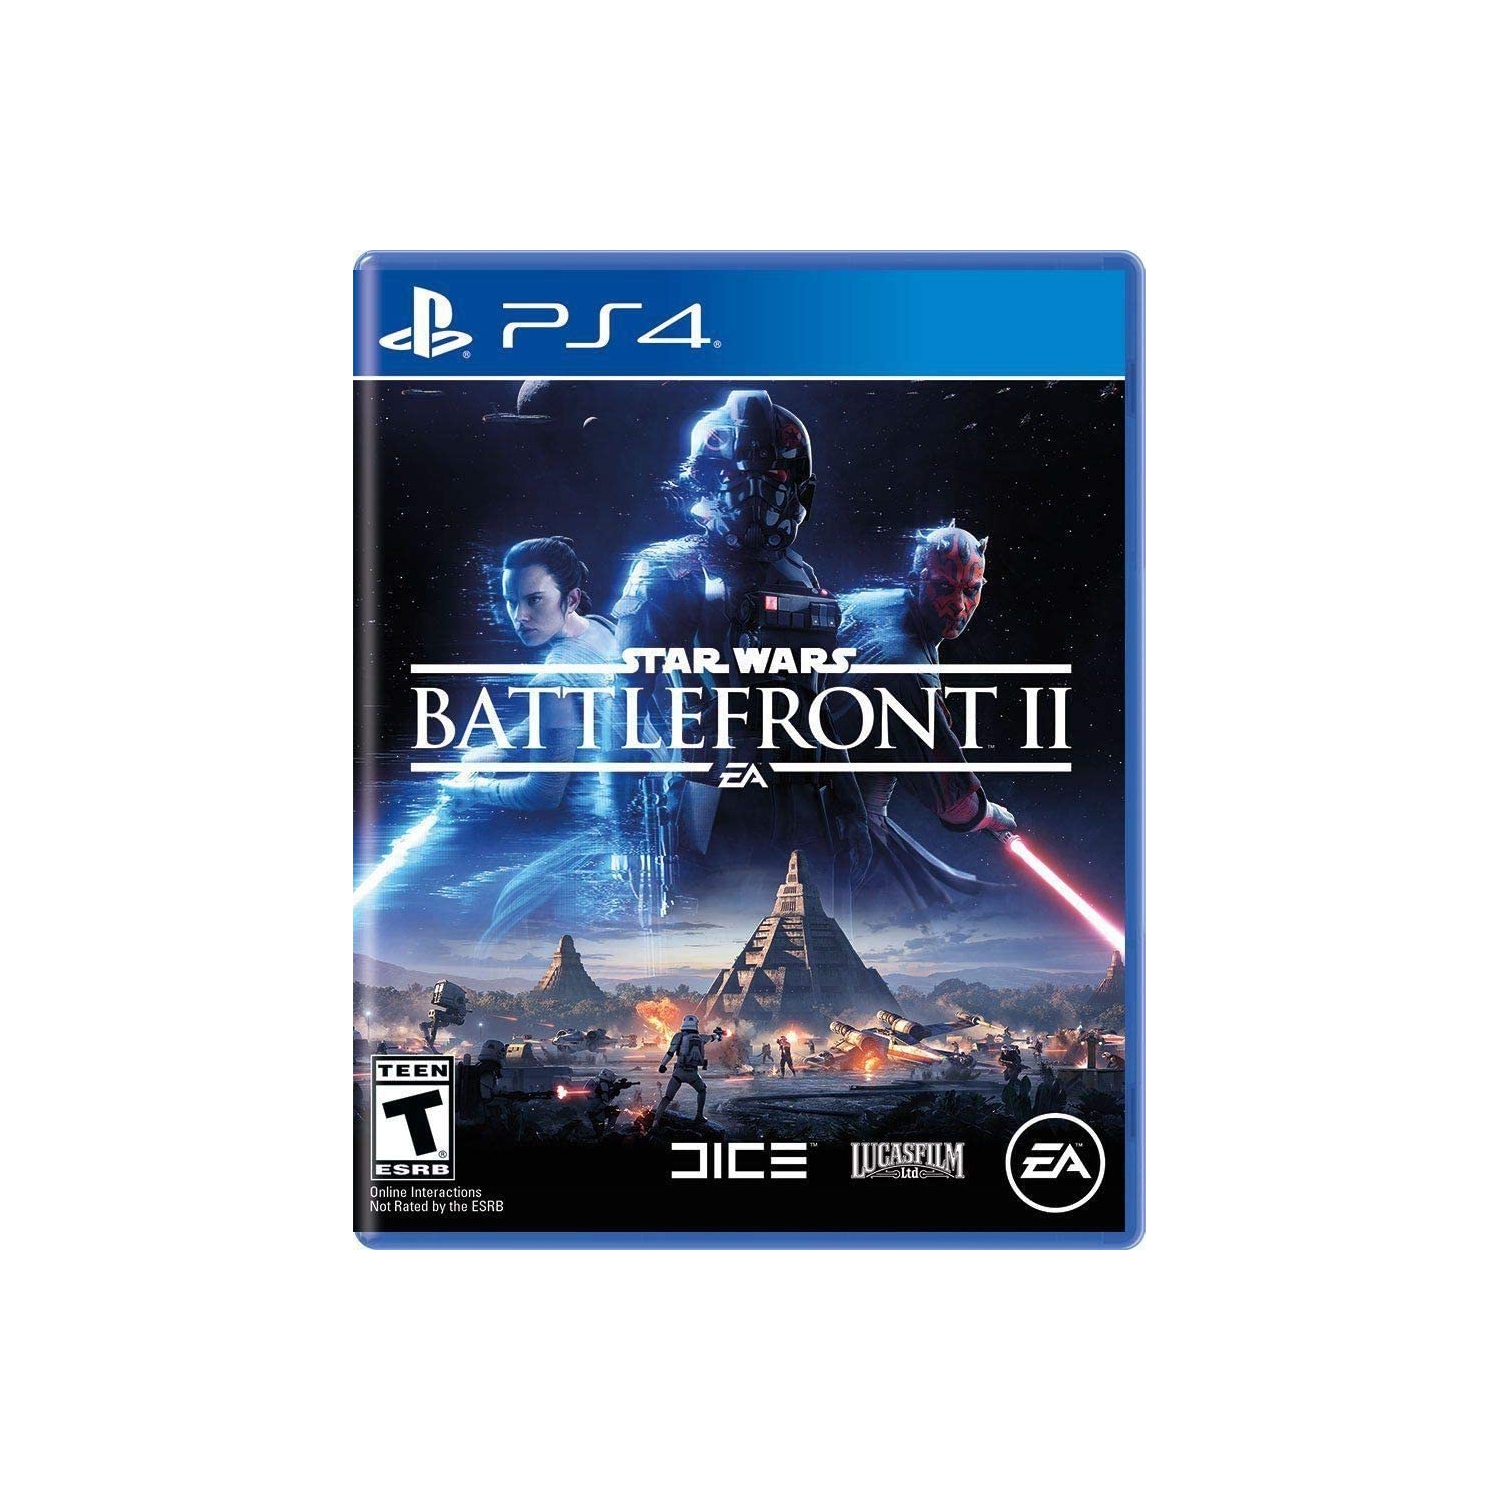 Star Wars Battlefront II for PlayStation 4 - Standard Edition